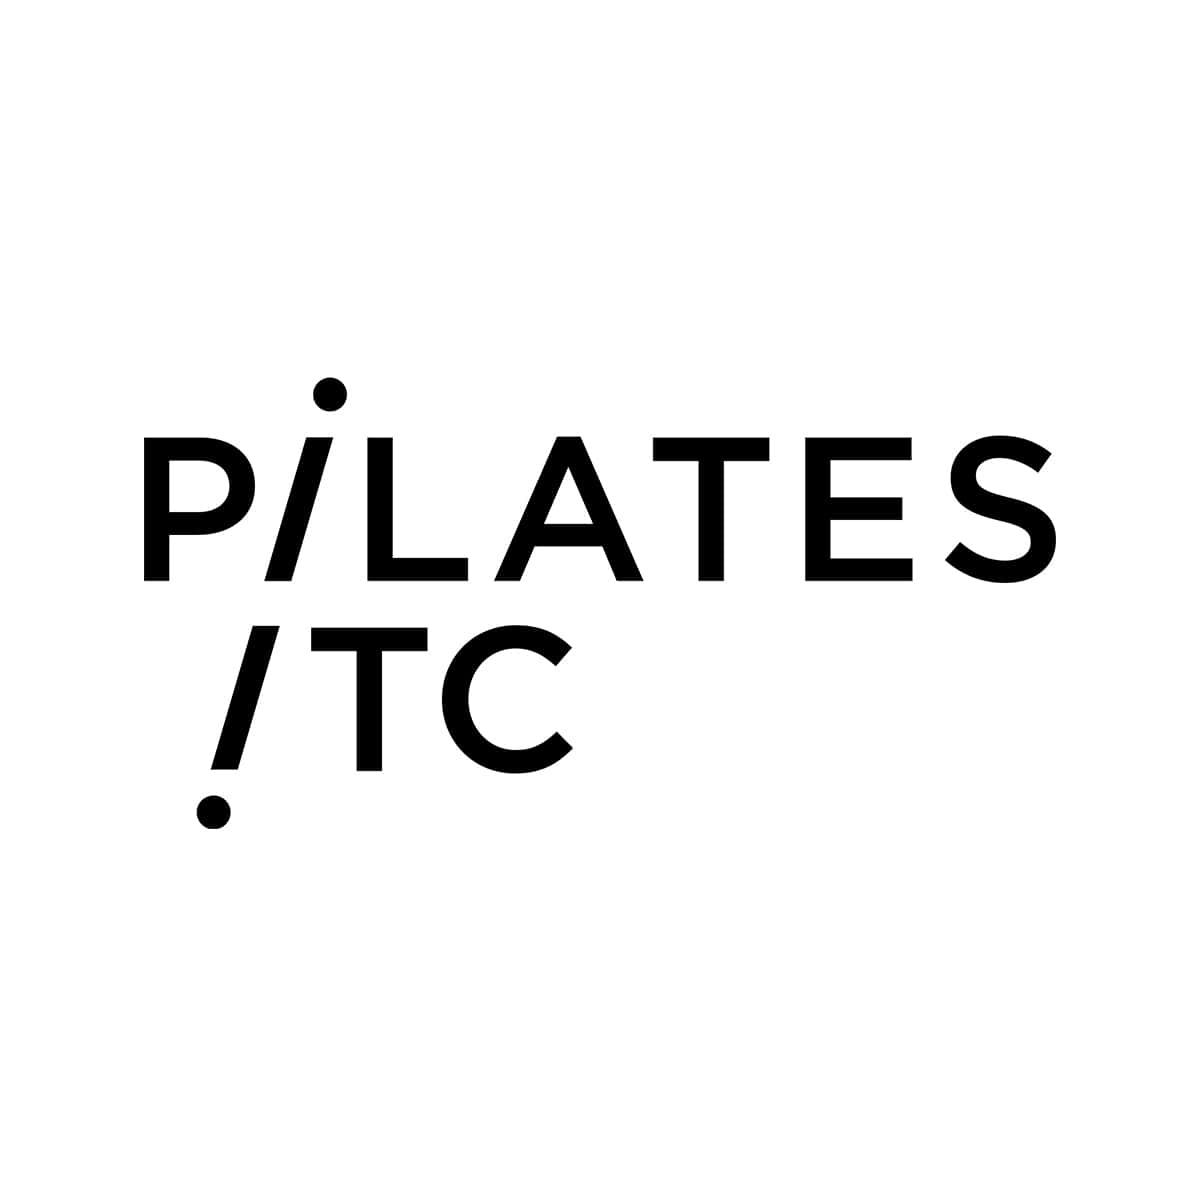 Sense-of-Power-Pilates-Referral-Network-Pilates-ITC